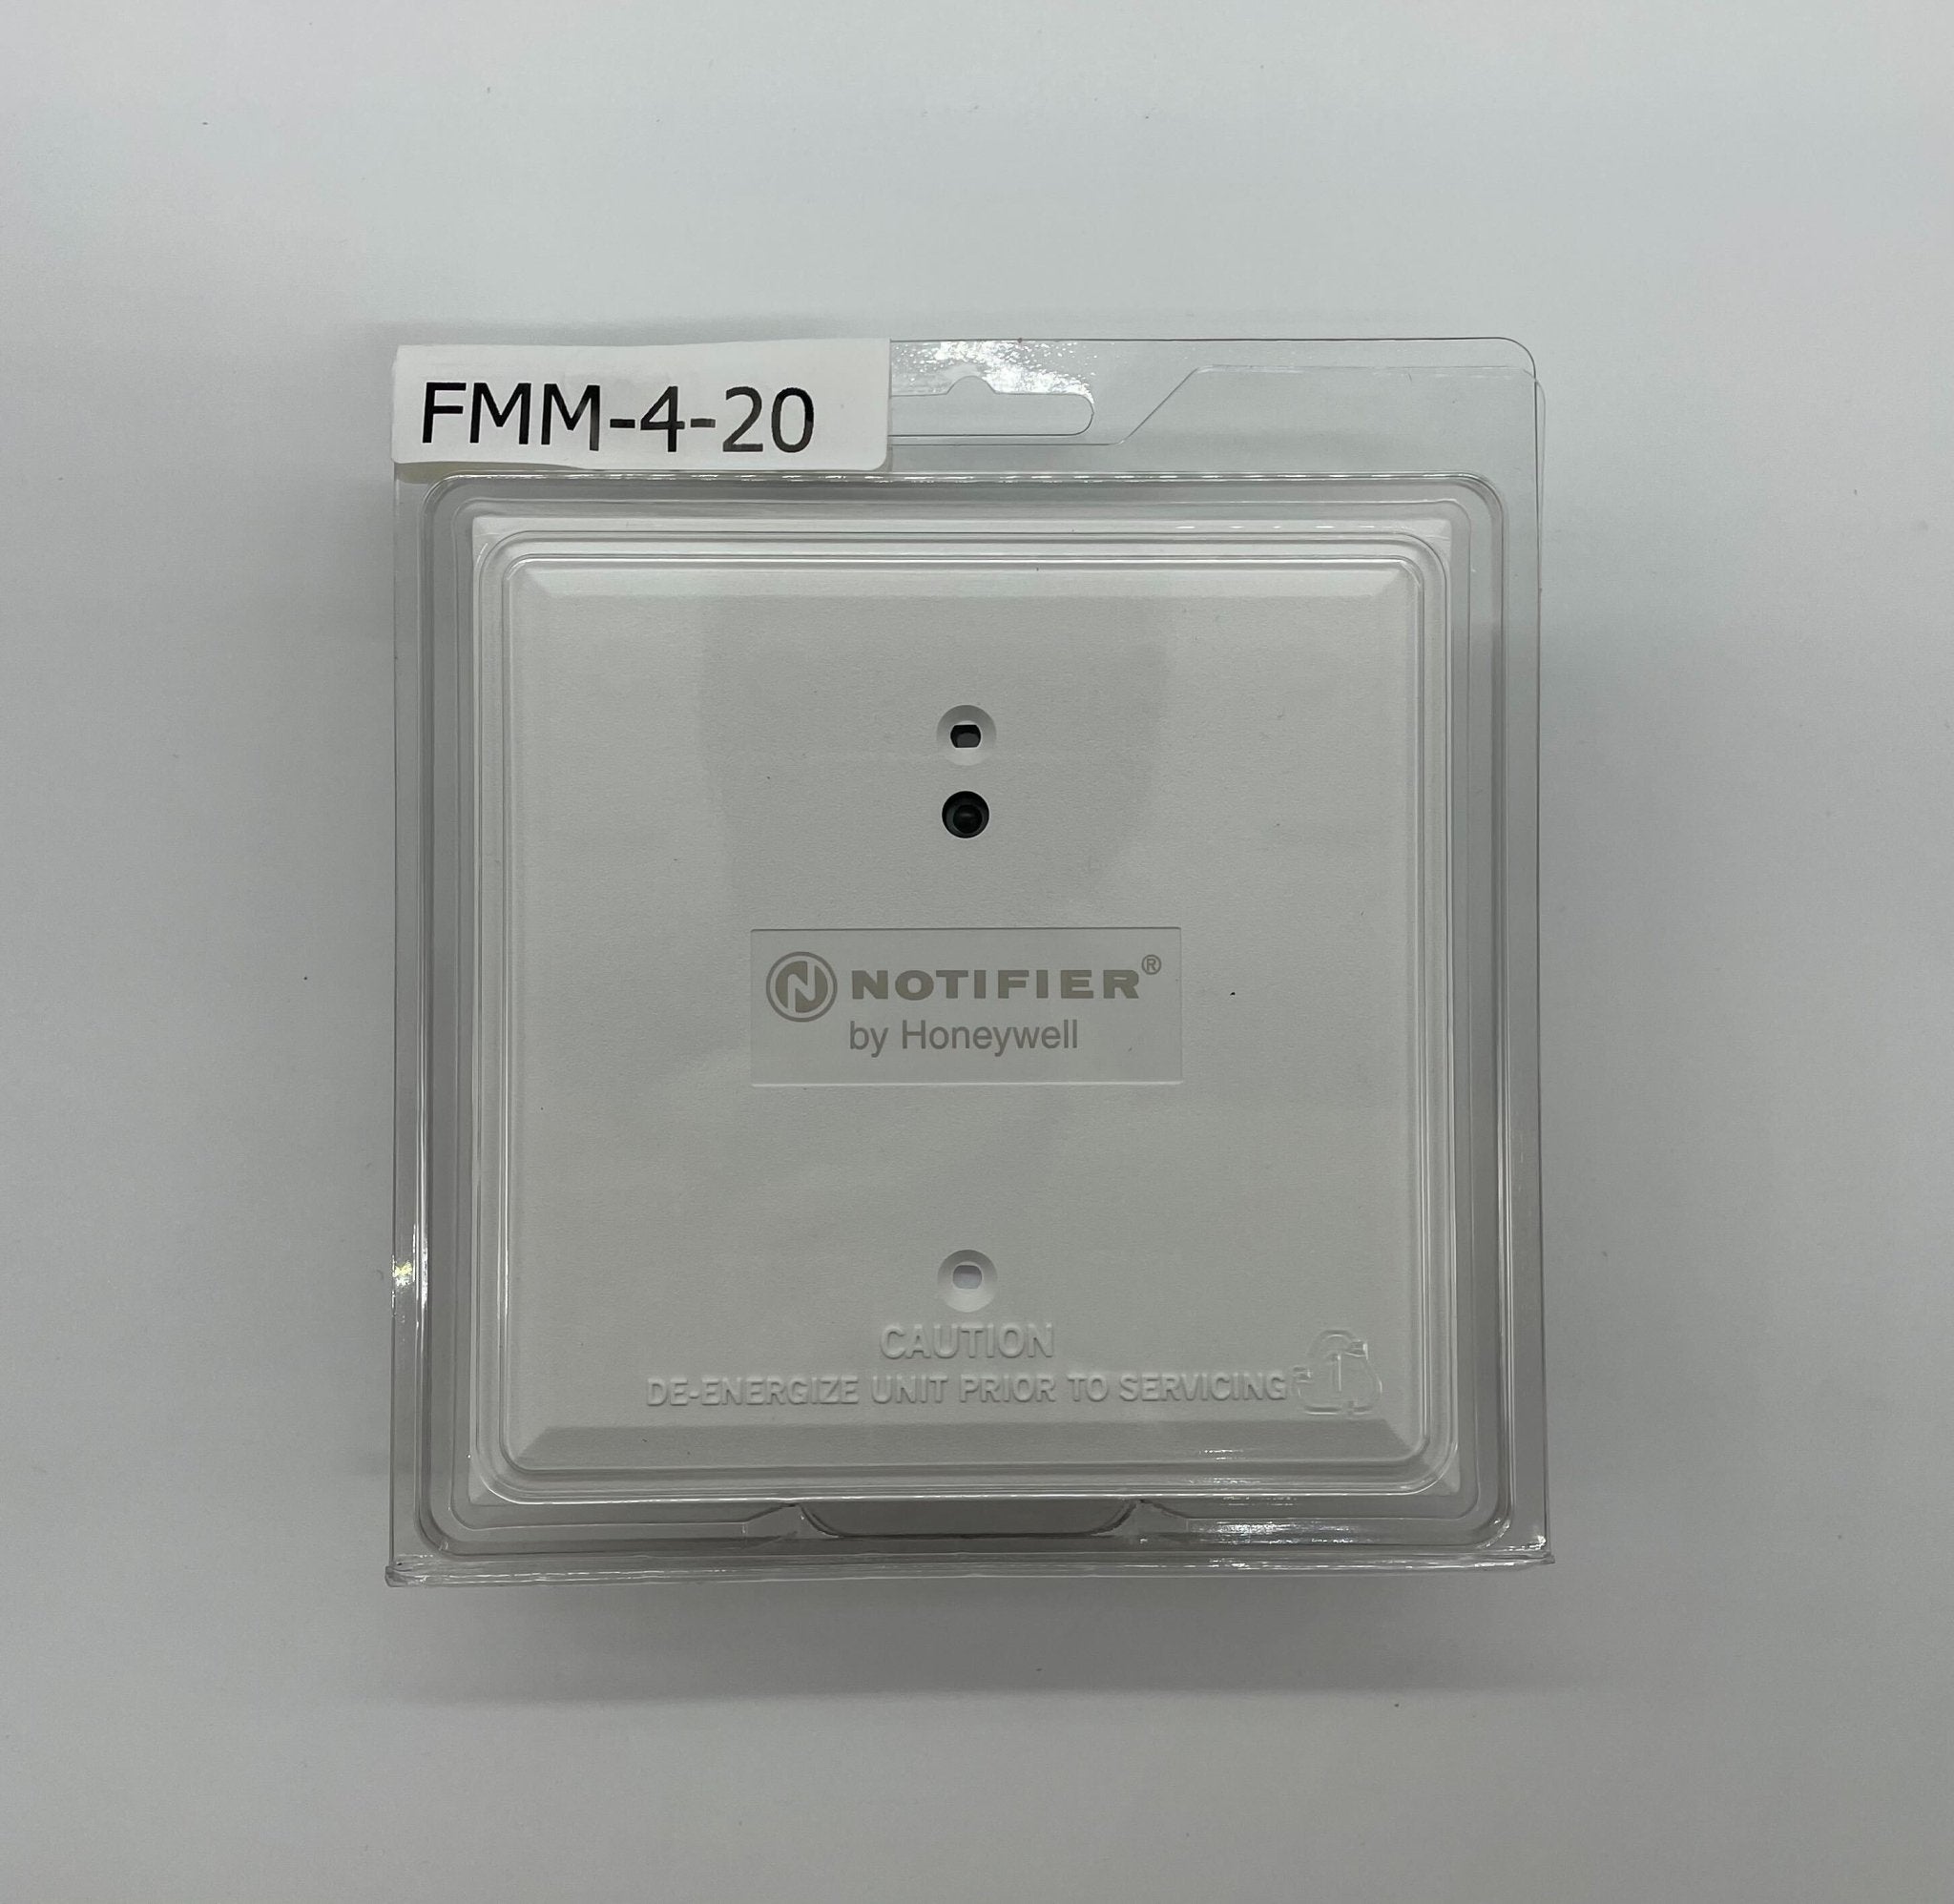 Notifier FMM-4-20 - The Fire Alarm Supplier